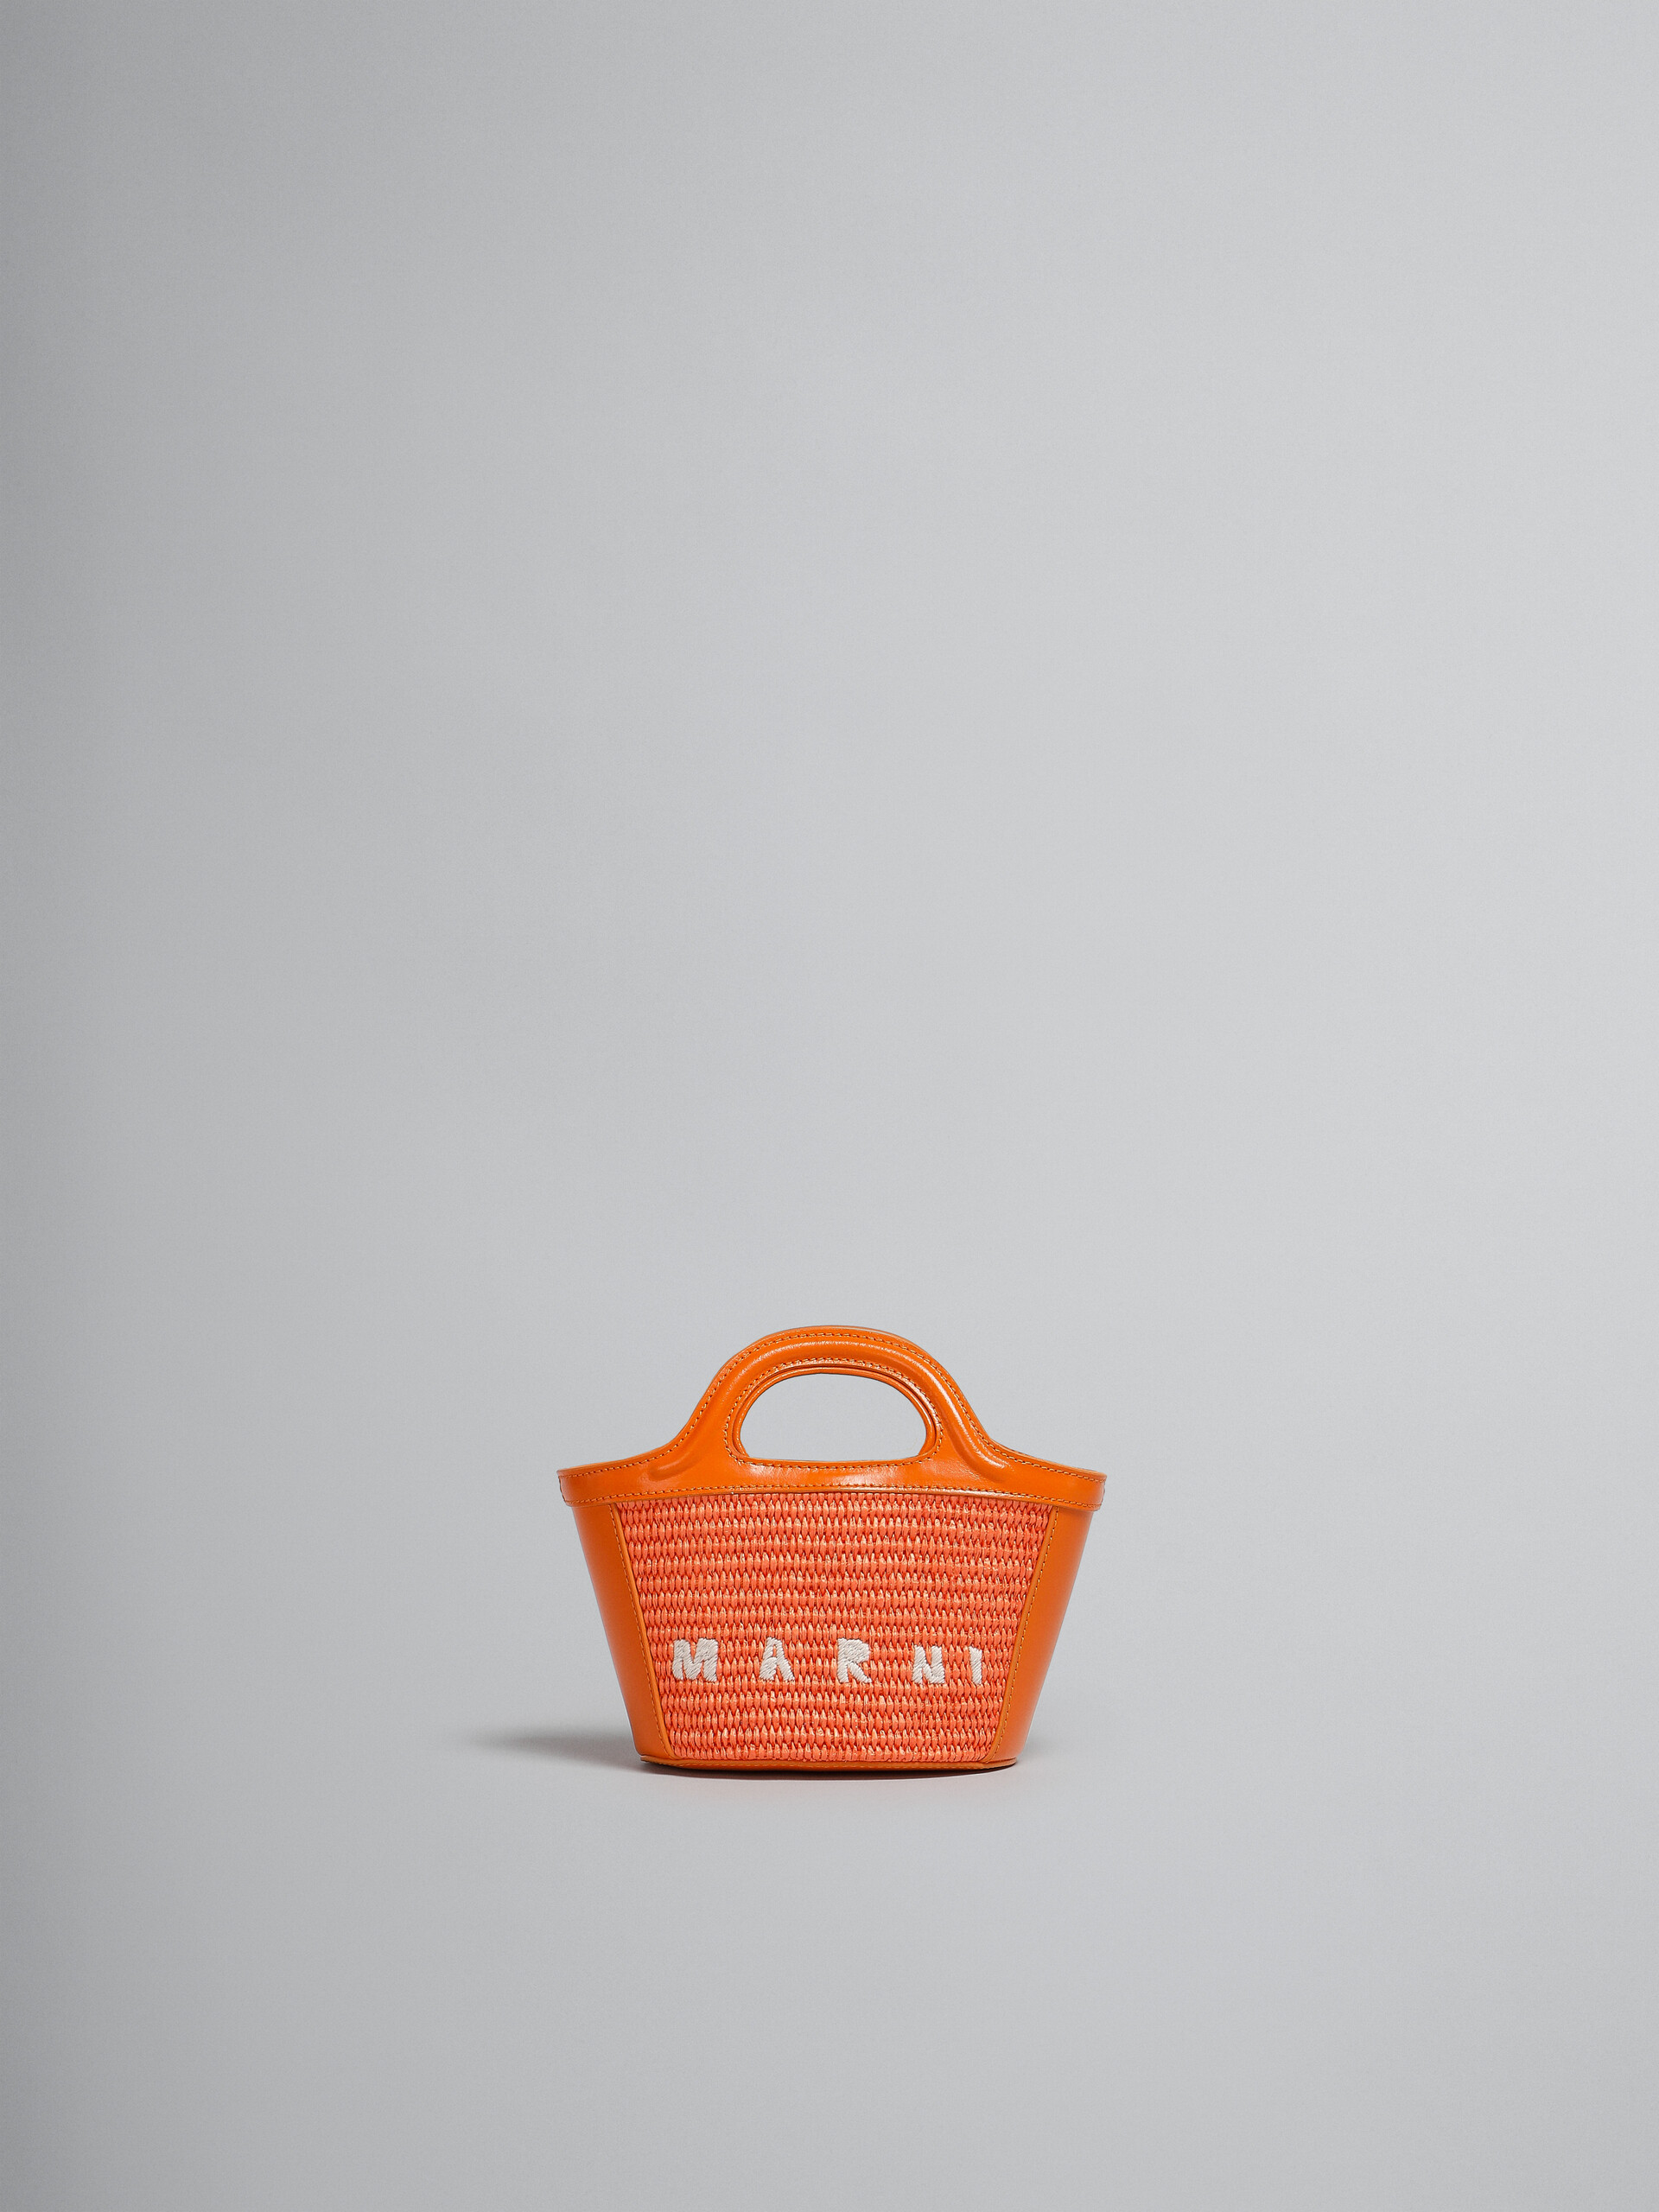 Tropicalia Micro Bag in orange leather and raffia - Handbag - Image 1